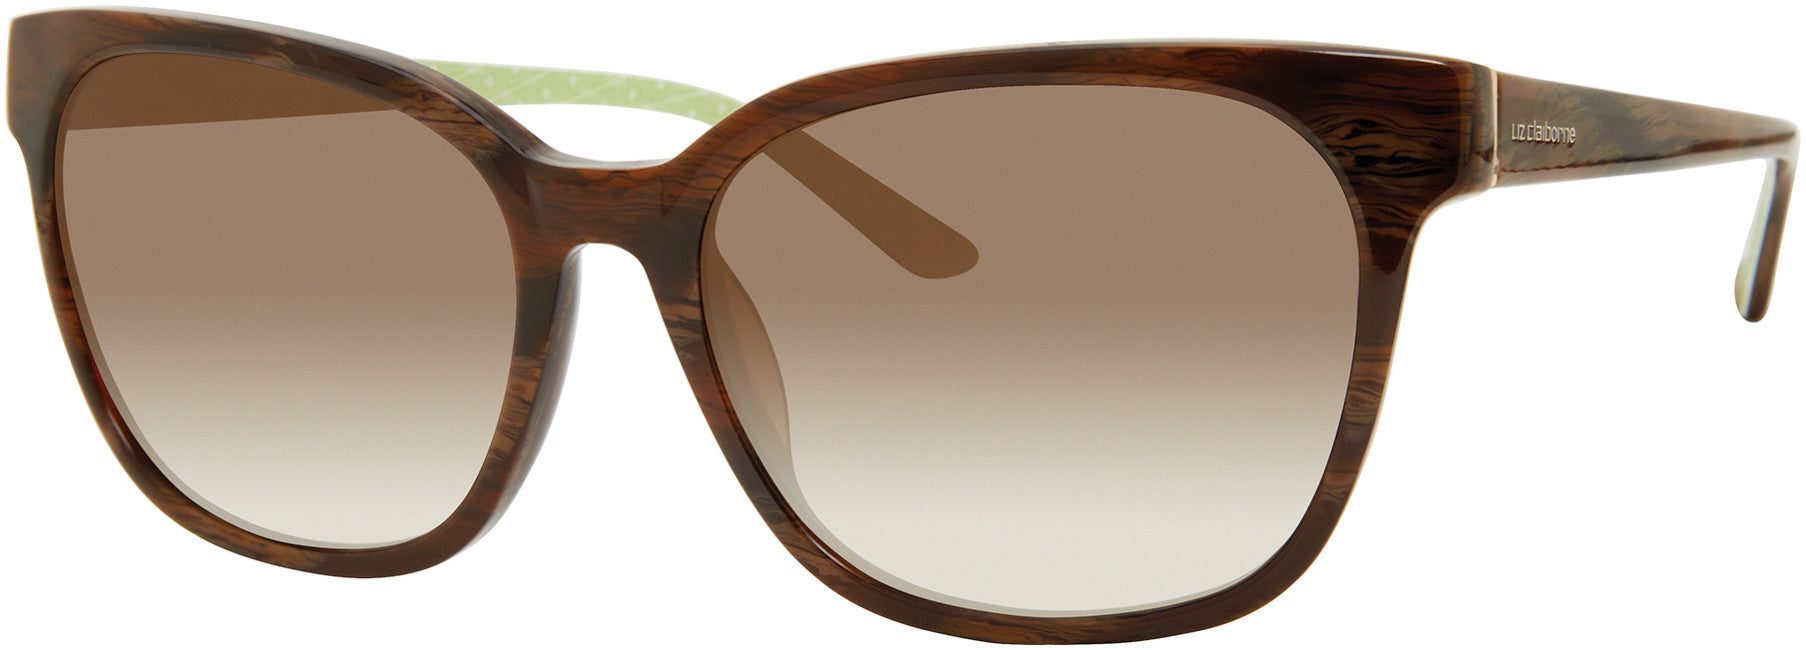  Liz Claiborne 572/S Oval Modified Sunglasses 0WR9-0WR9  Brown Havana (HA Brown Gradient)